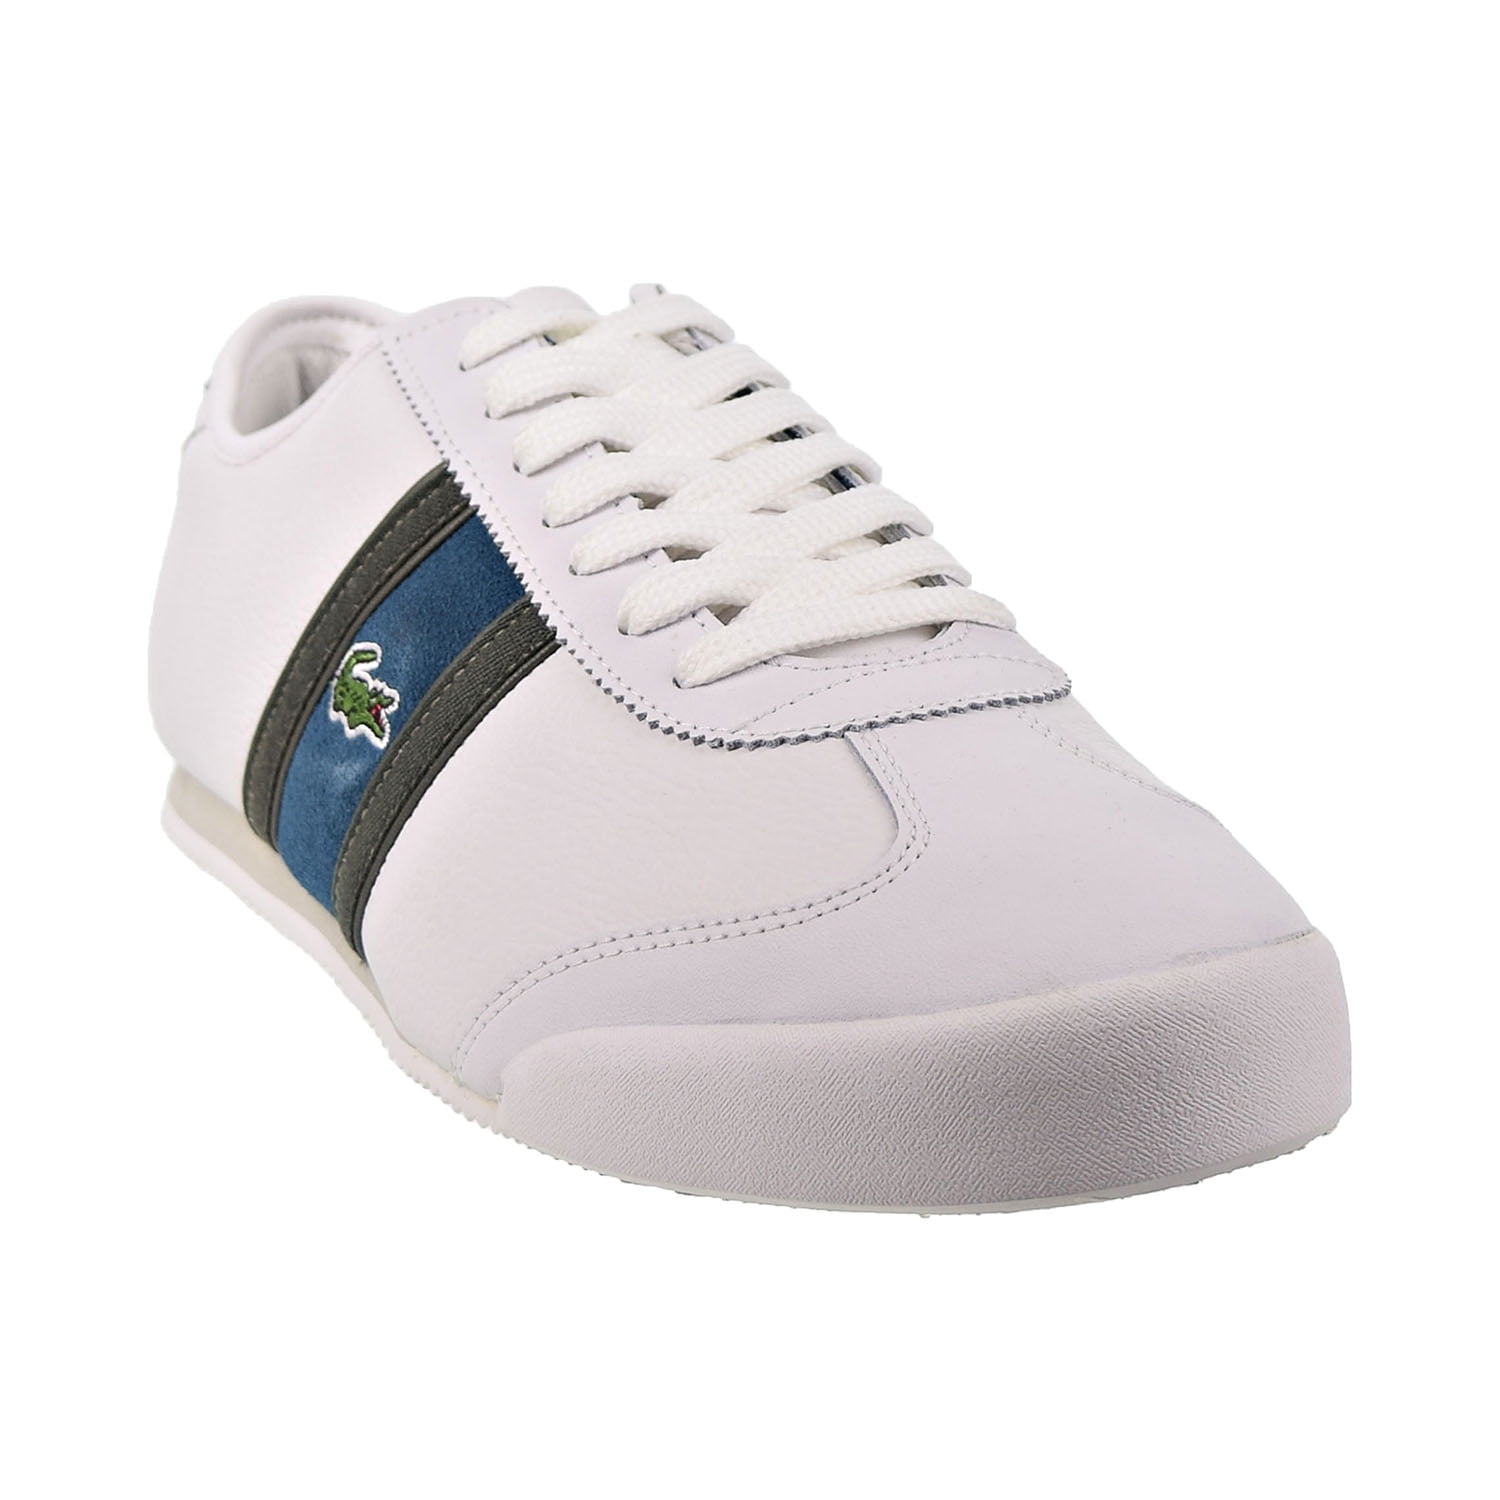 Lacoste Tourelle WS SPM Men's Shoes White-Dark Green 7-22spm6171-1r5 - Walmart.com